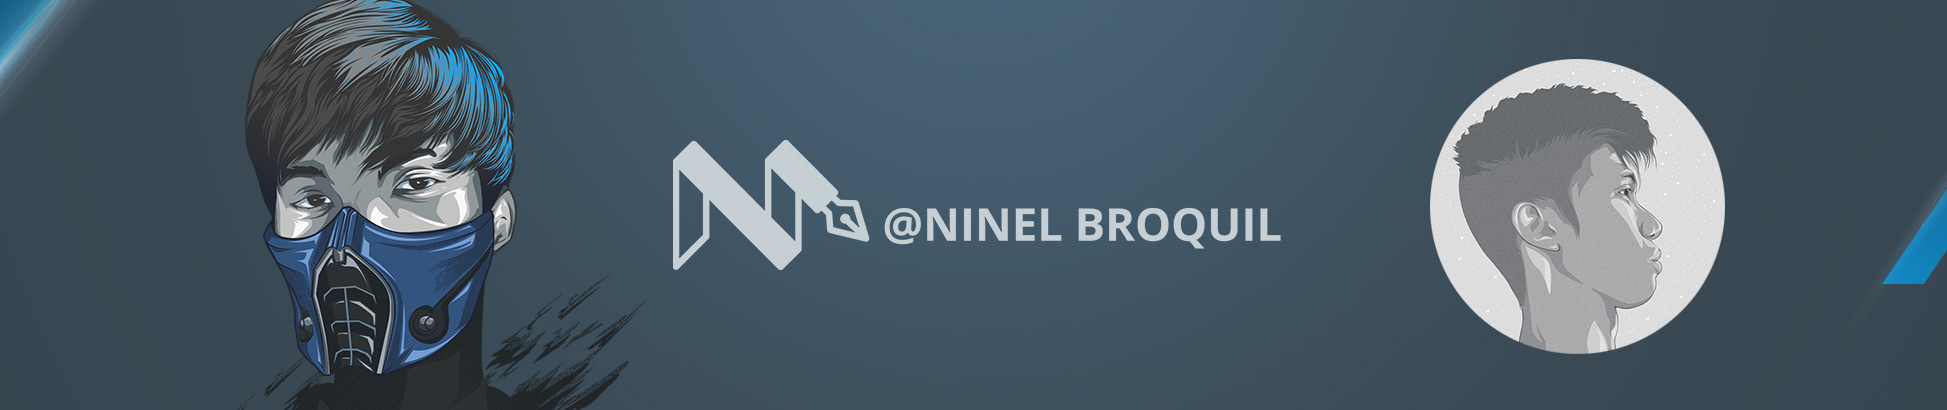 Profielbanner van Ninel Mikhael Broquil